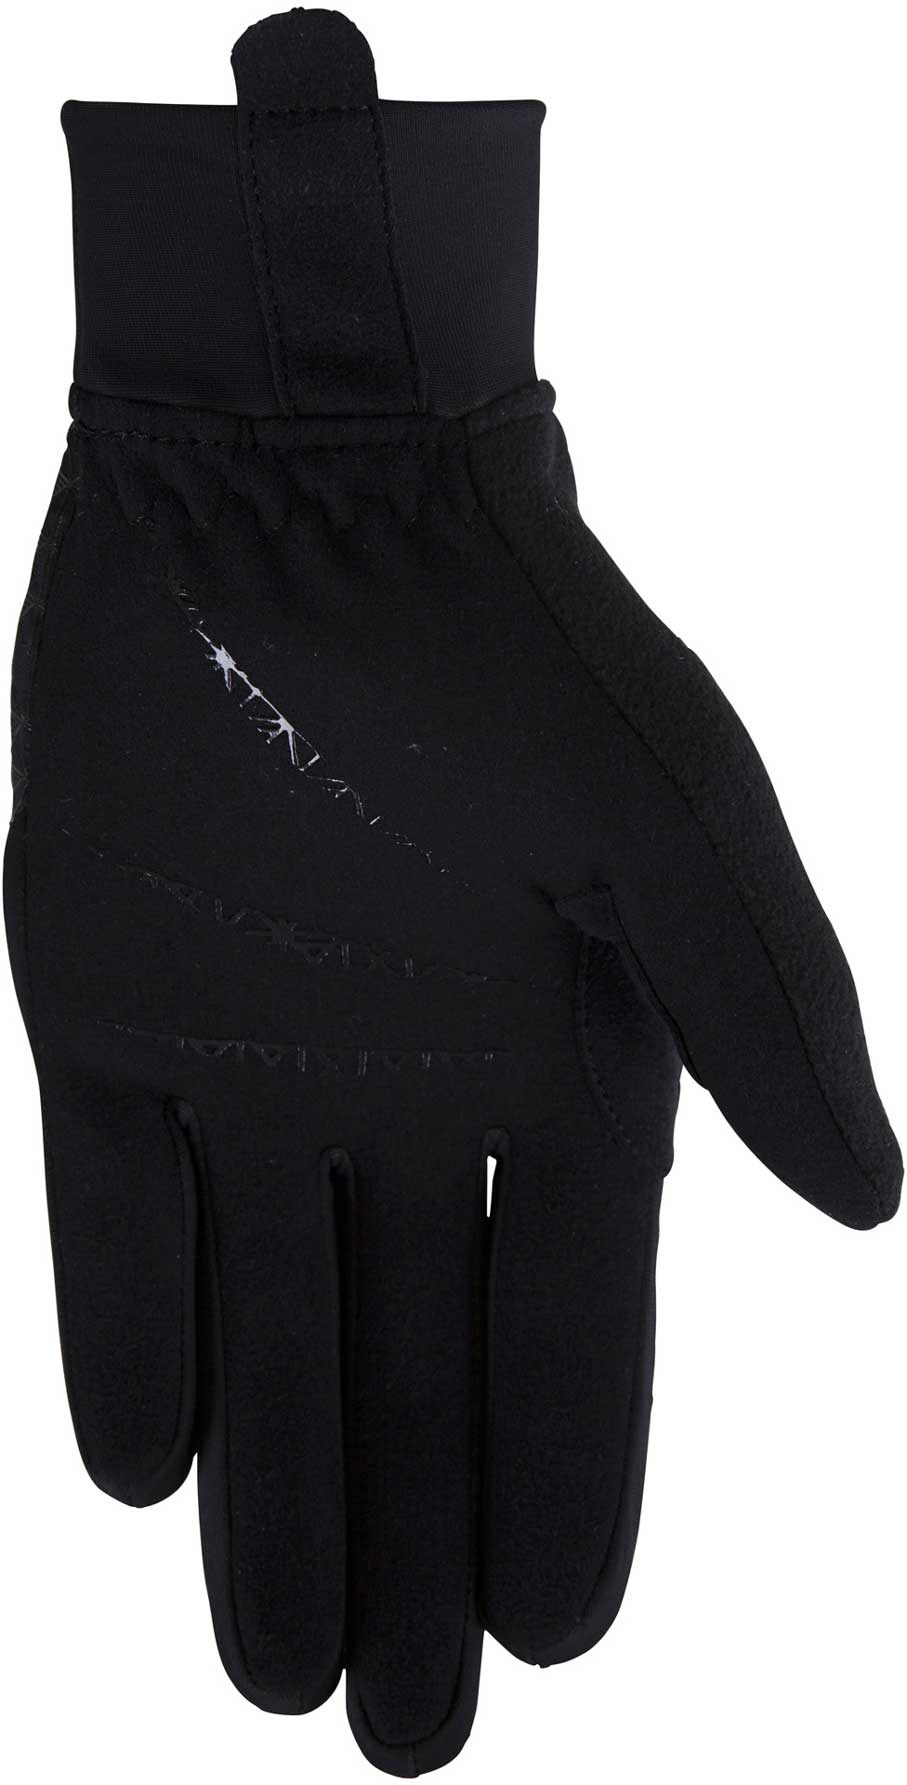 Women’s sports gloves